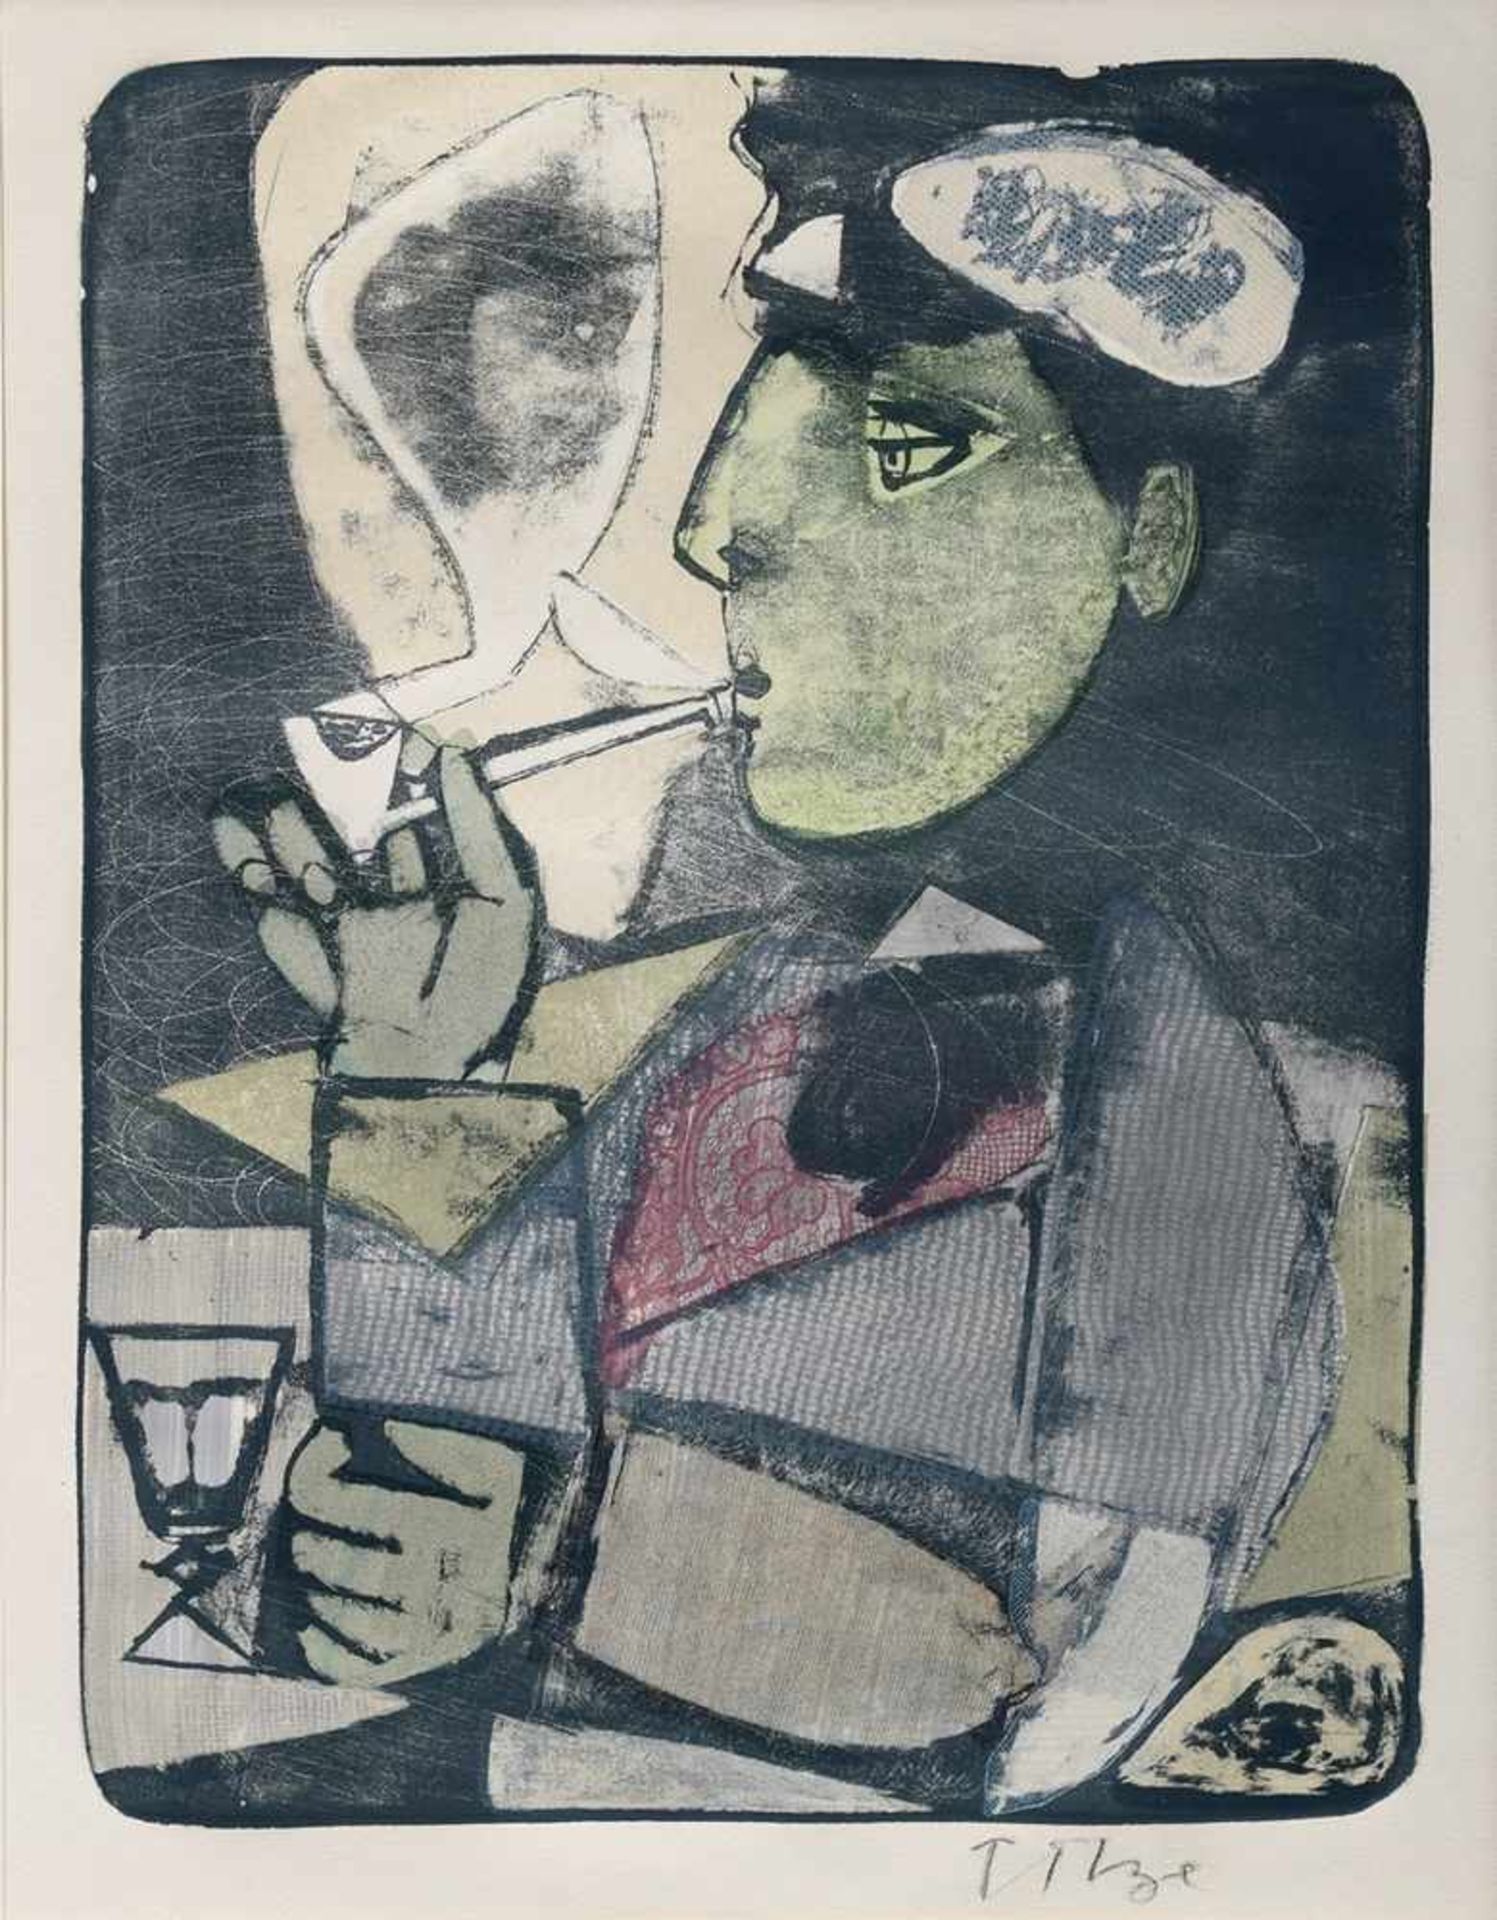 Titze, Willi (1890-1979) "Pfeifenraucher", farbige Frottage/Lithographie, u.r. sign., 37,5x27cm (m.